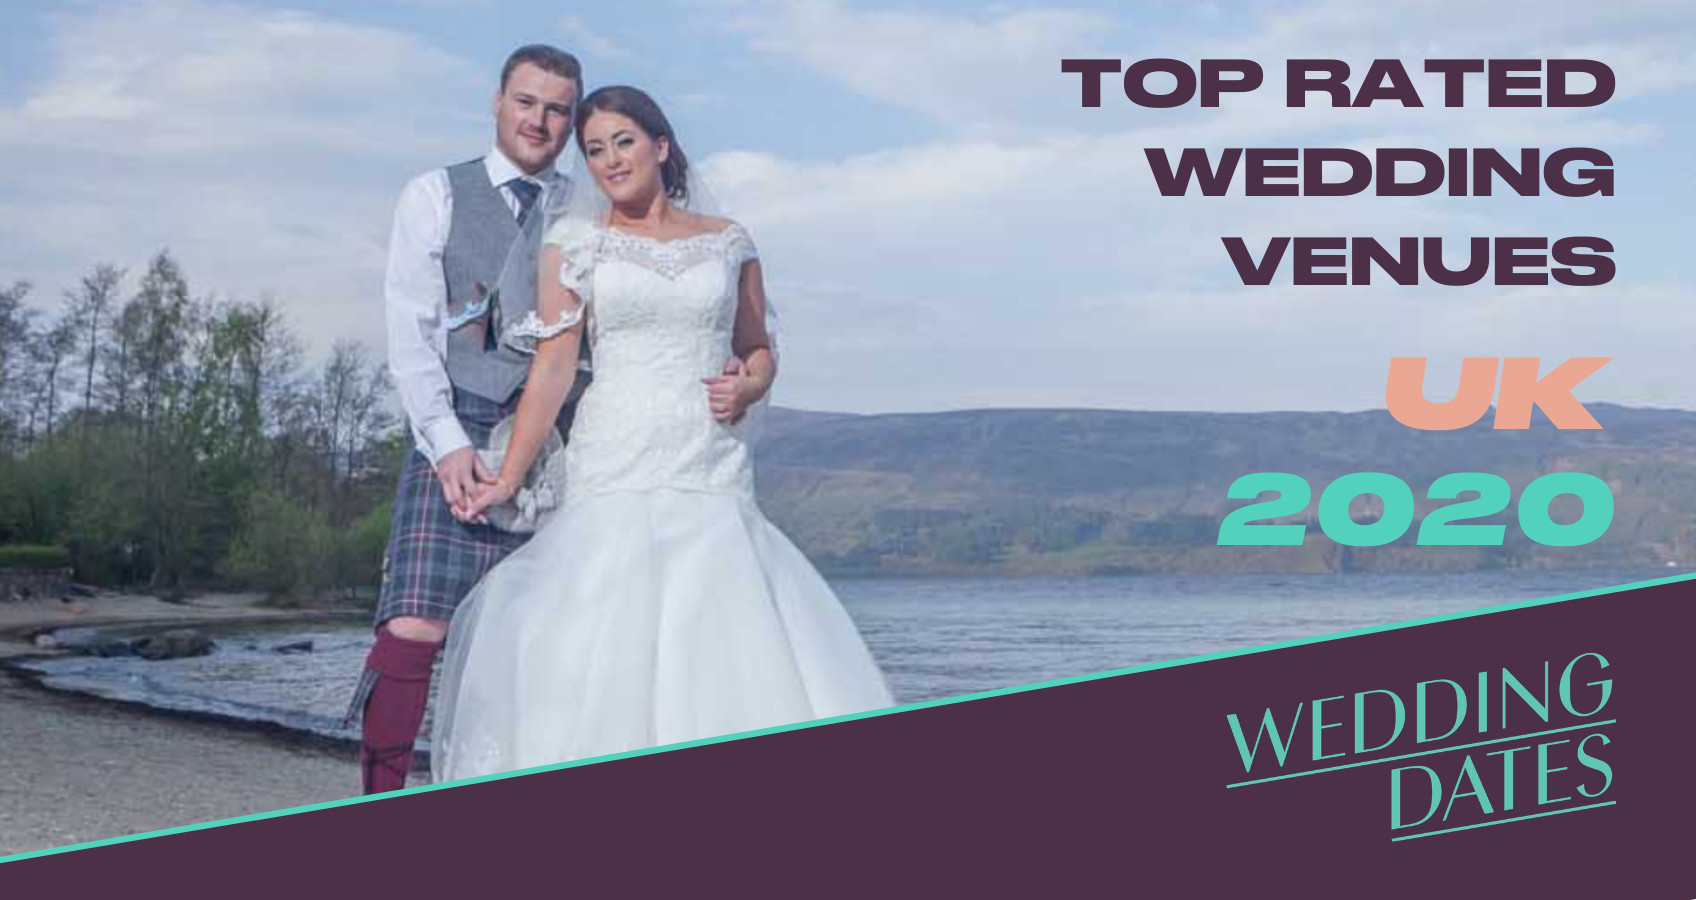 WeddingDates UK Awards Top Rated Wedding Venues